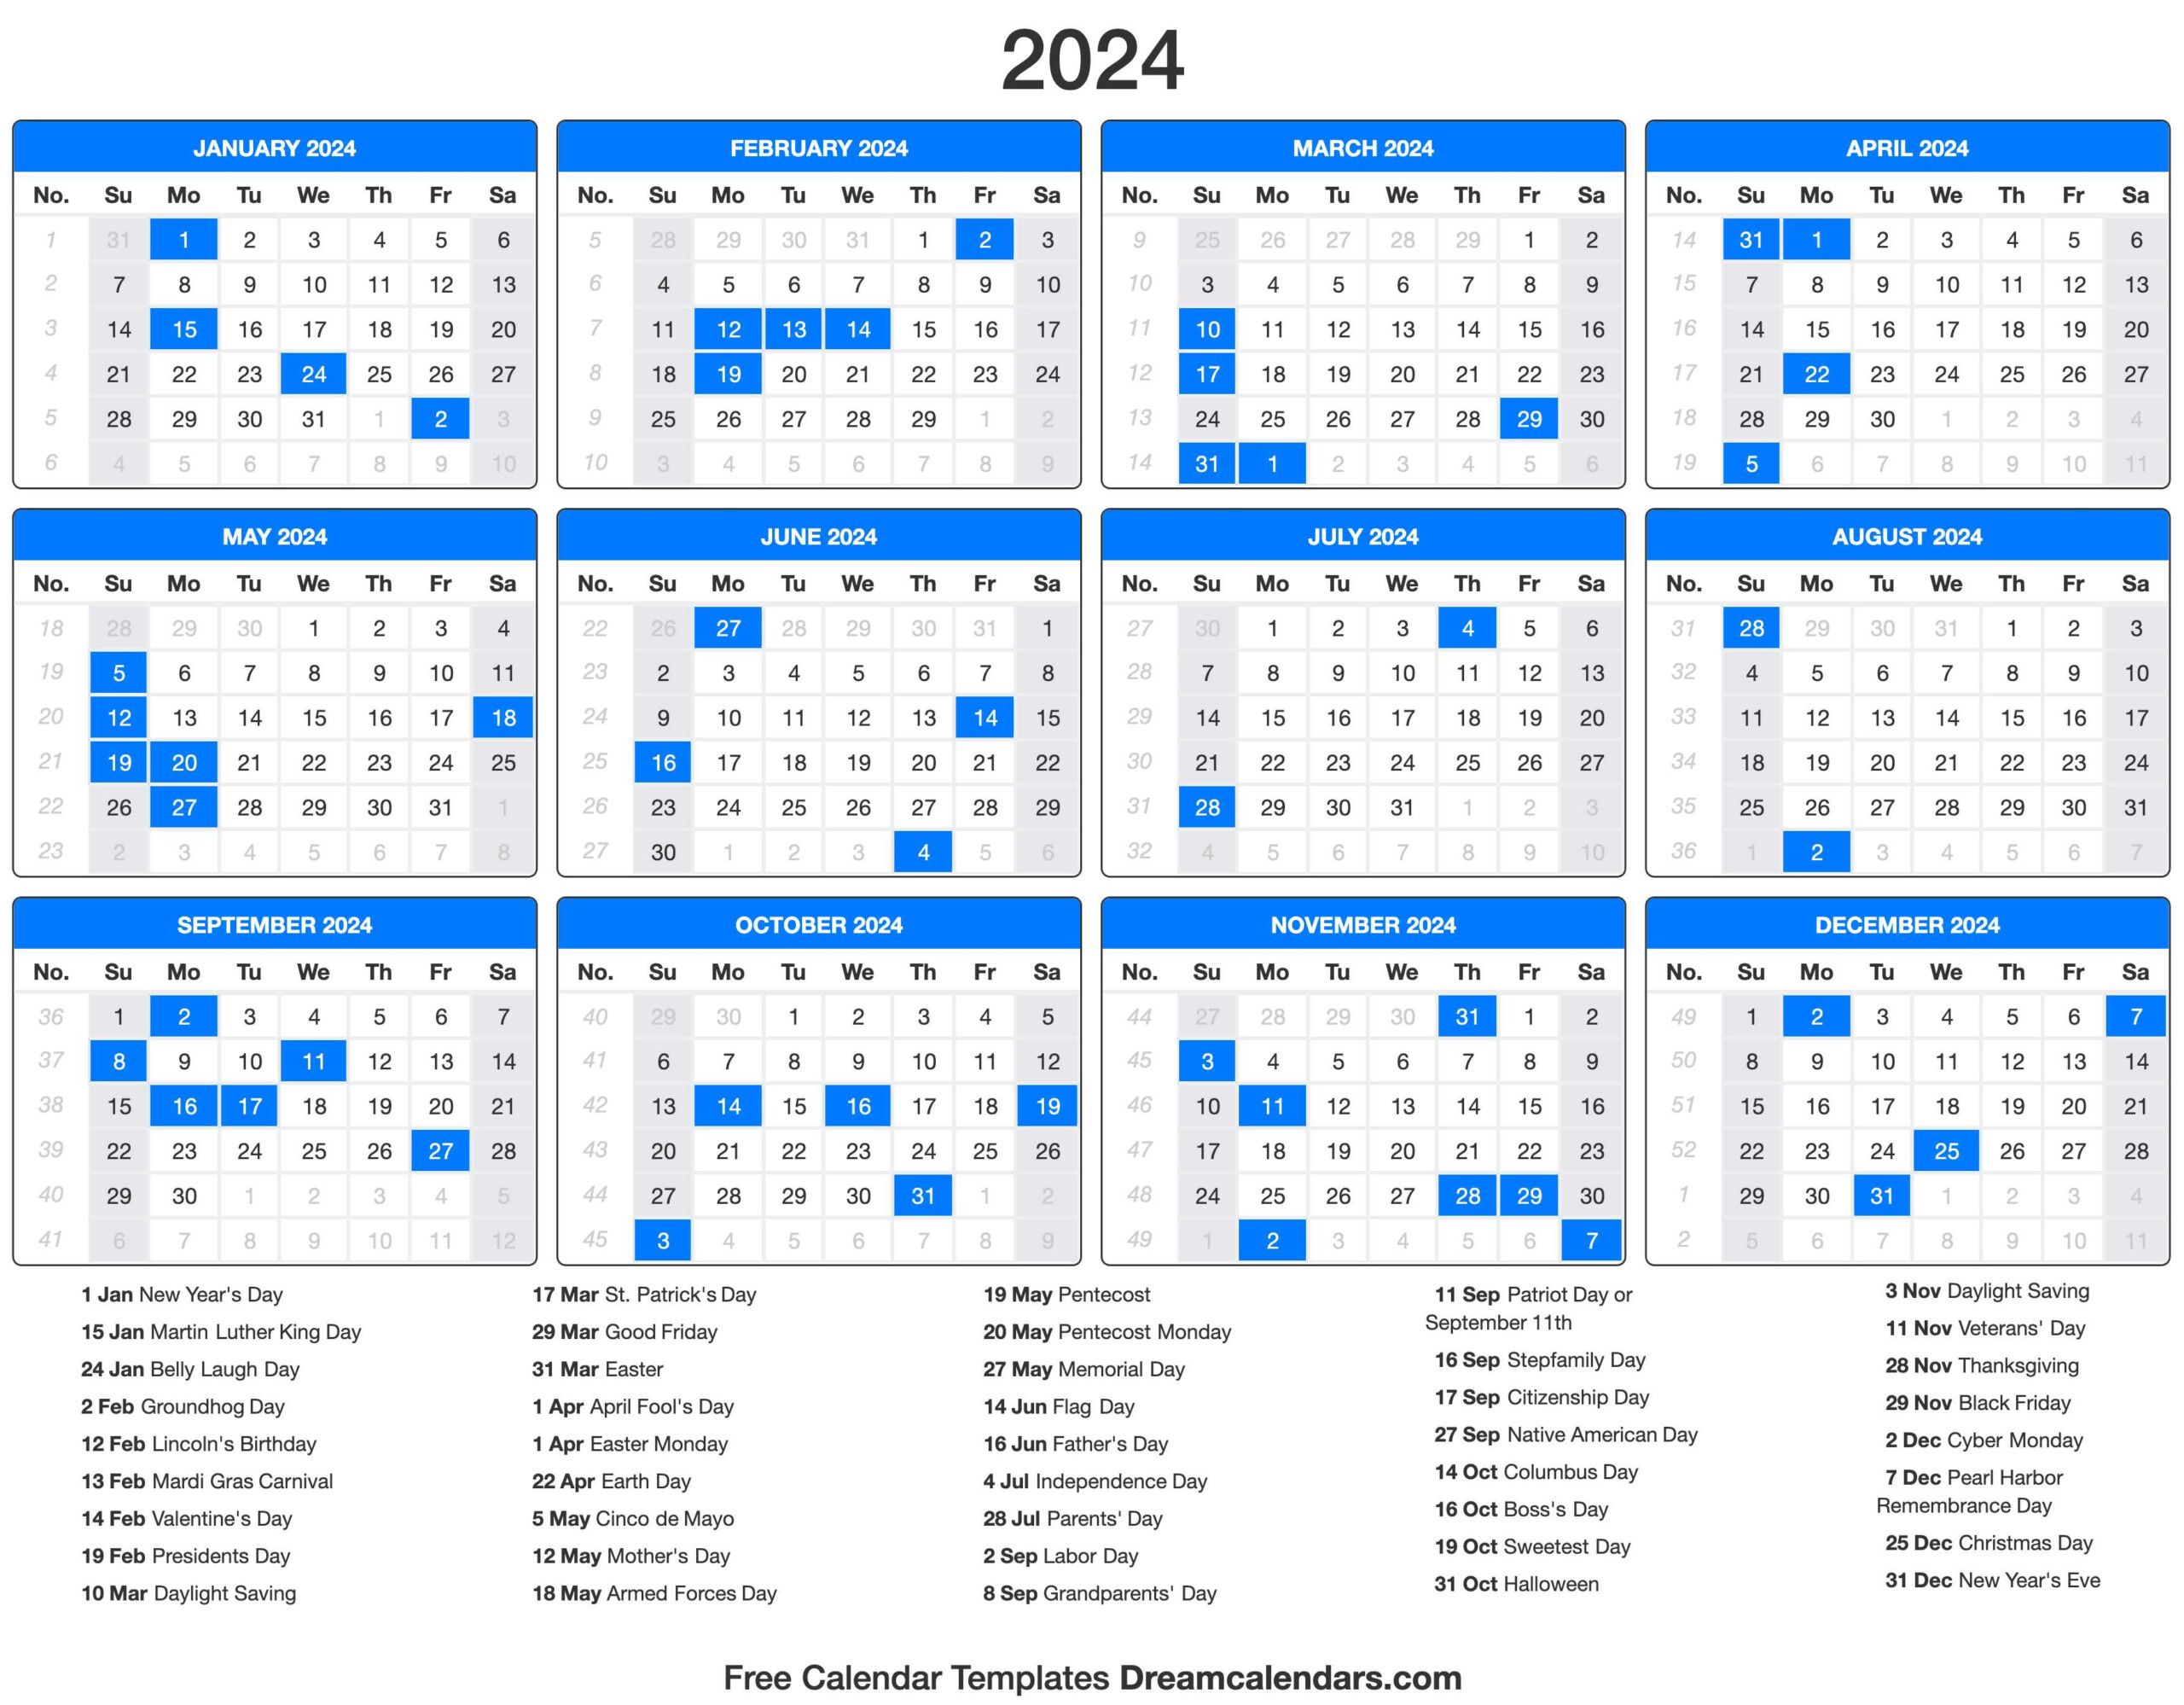 Us Bank Holidays 2024 Calendars Adey Robinia